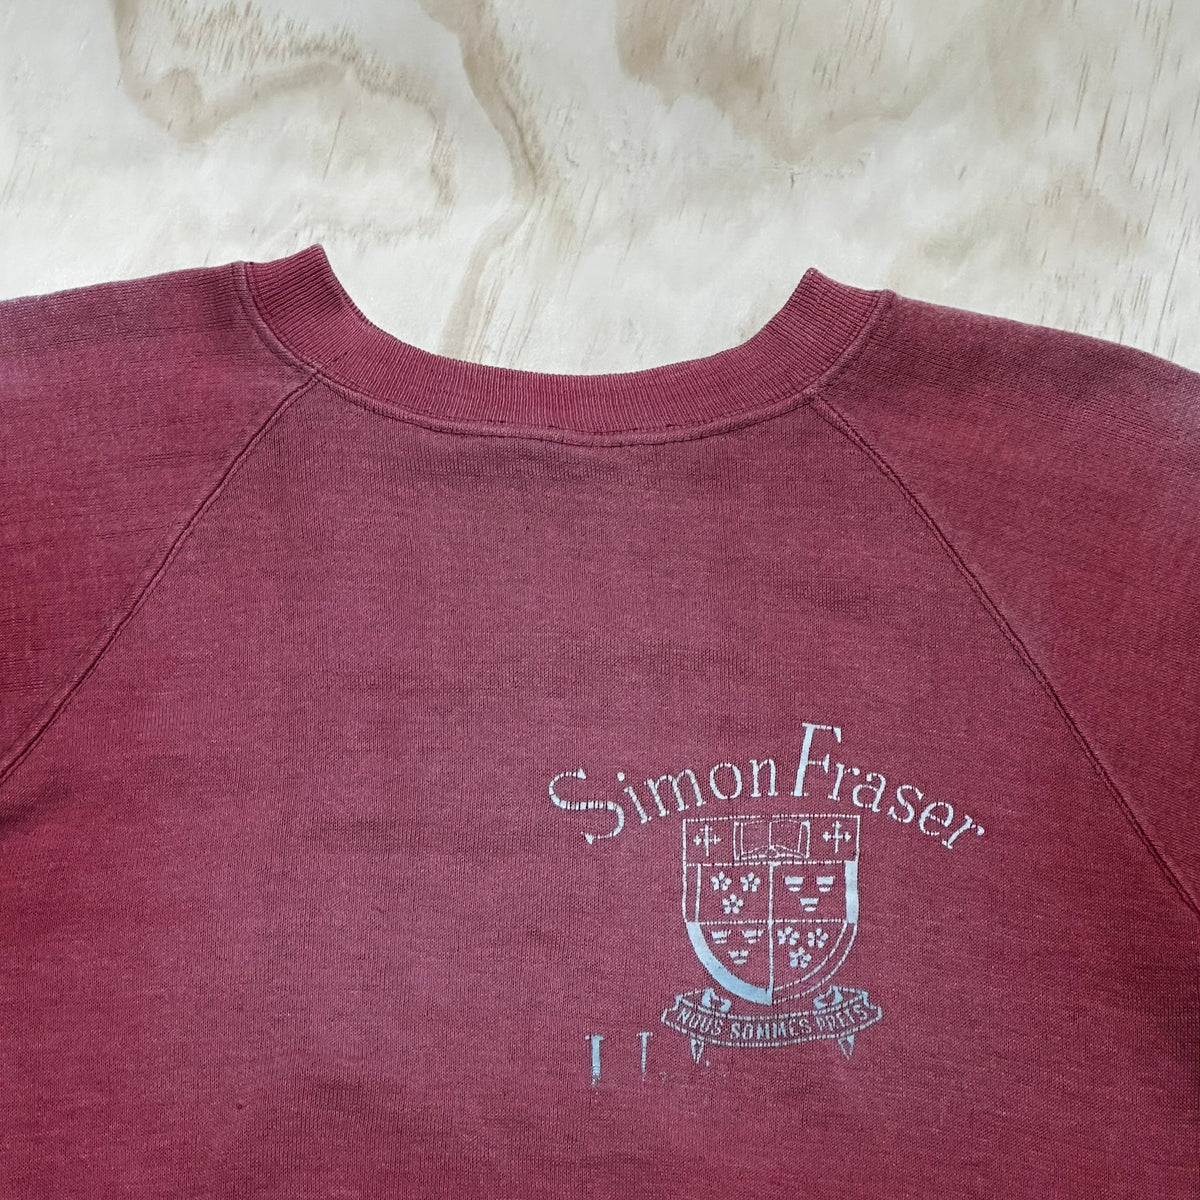 Vintage 80s Distressed Simon Fraser University Short Sleeve women’s sweatshirt